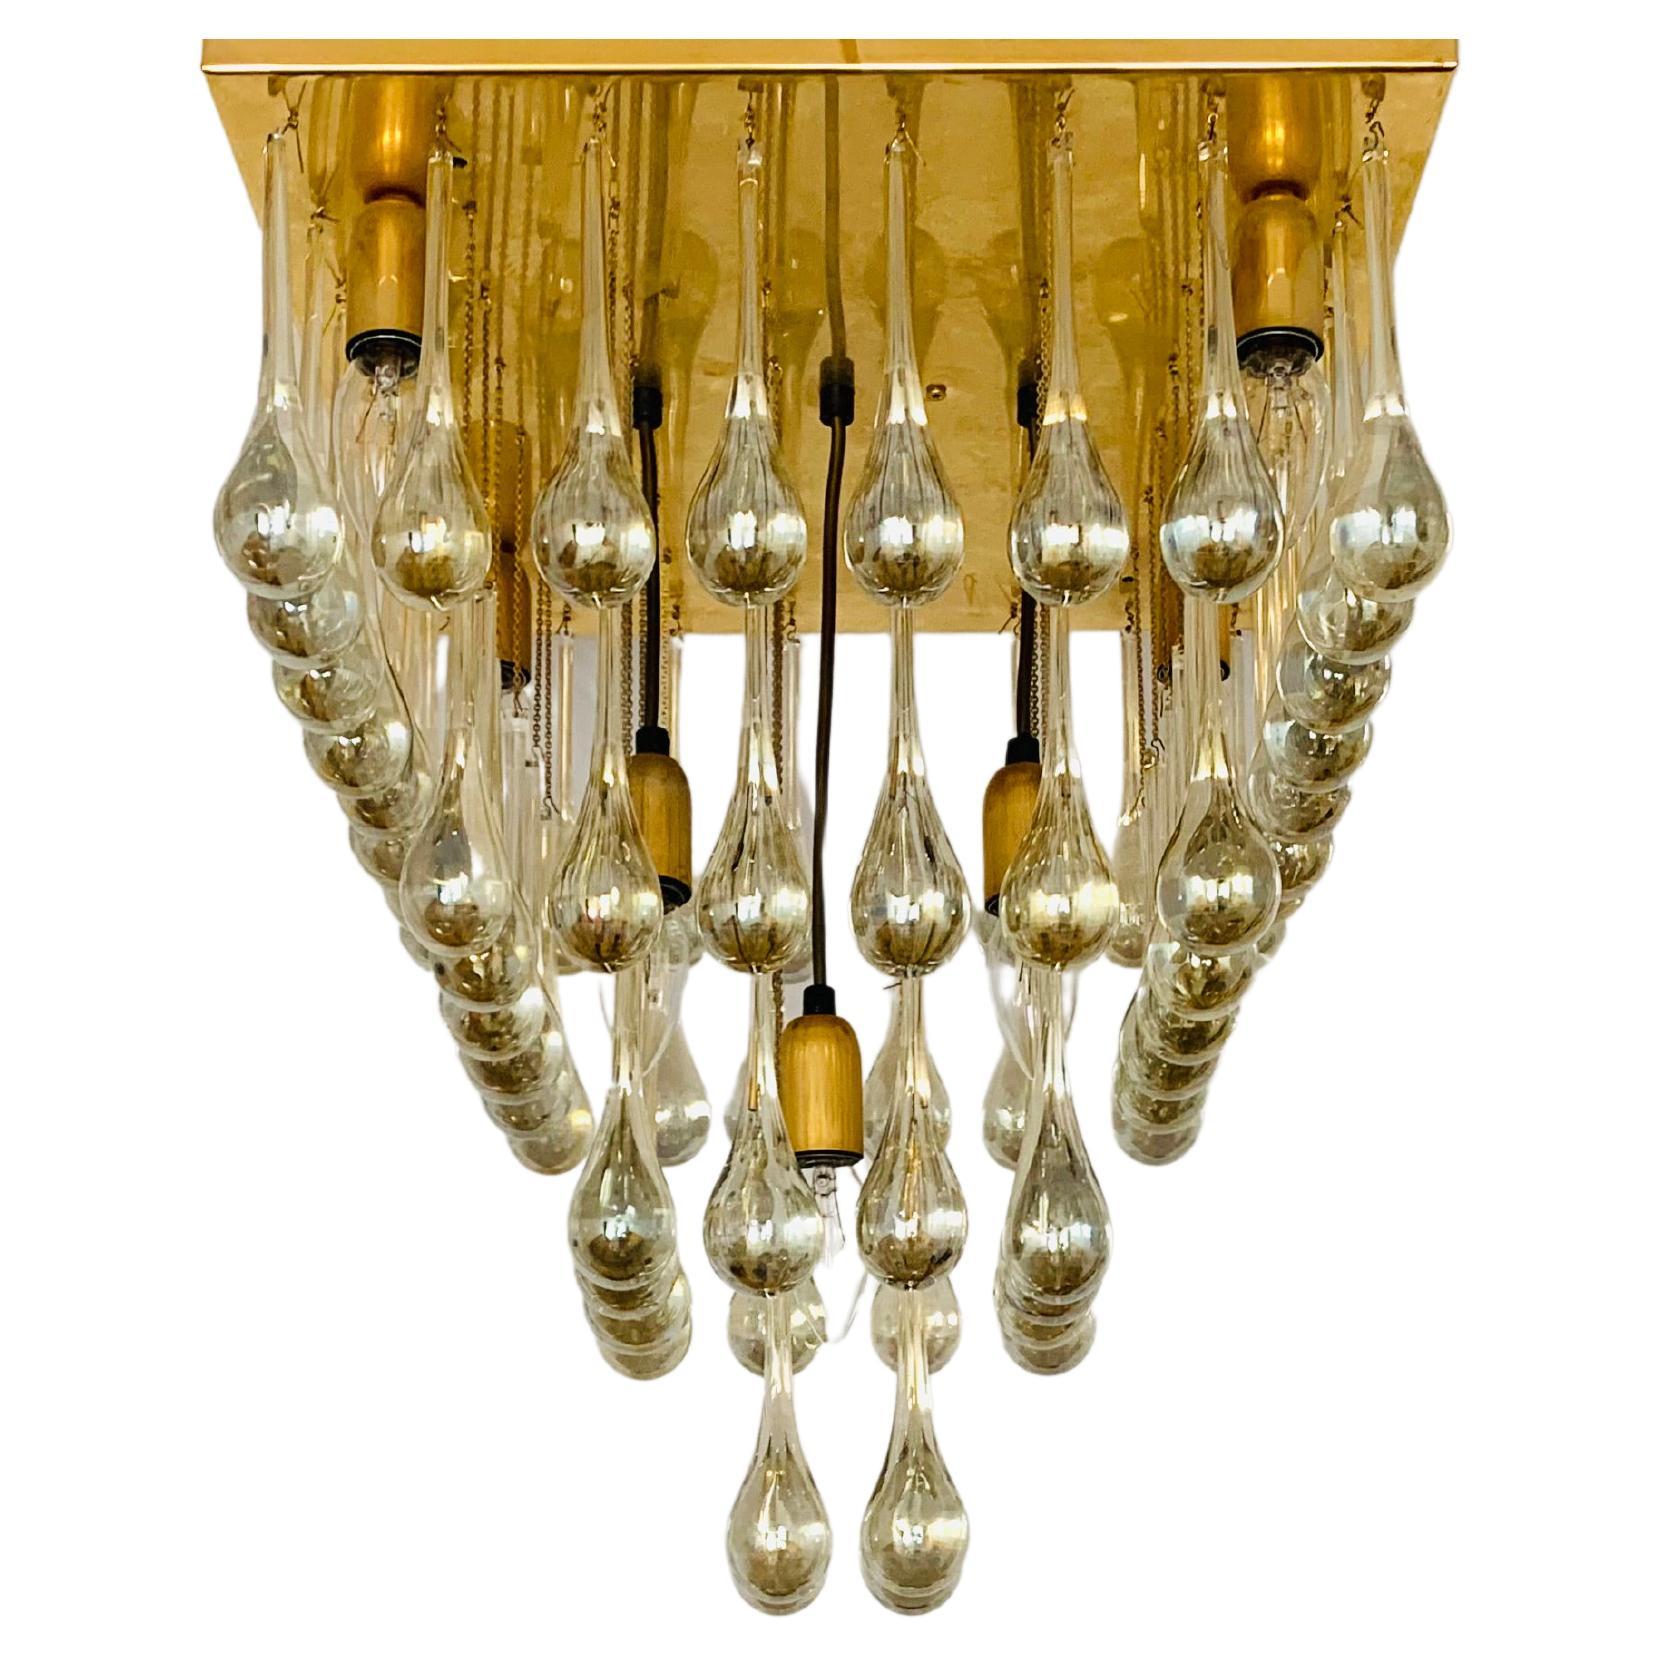 Ceiling chandelier by Ernst Palme For Sale at 1stDibs